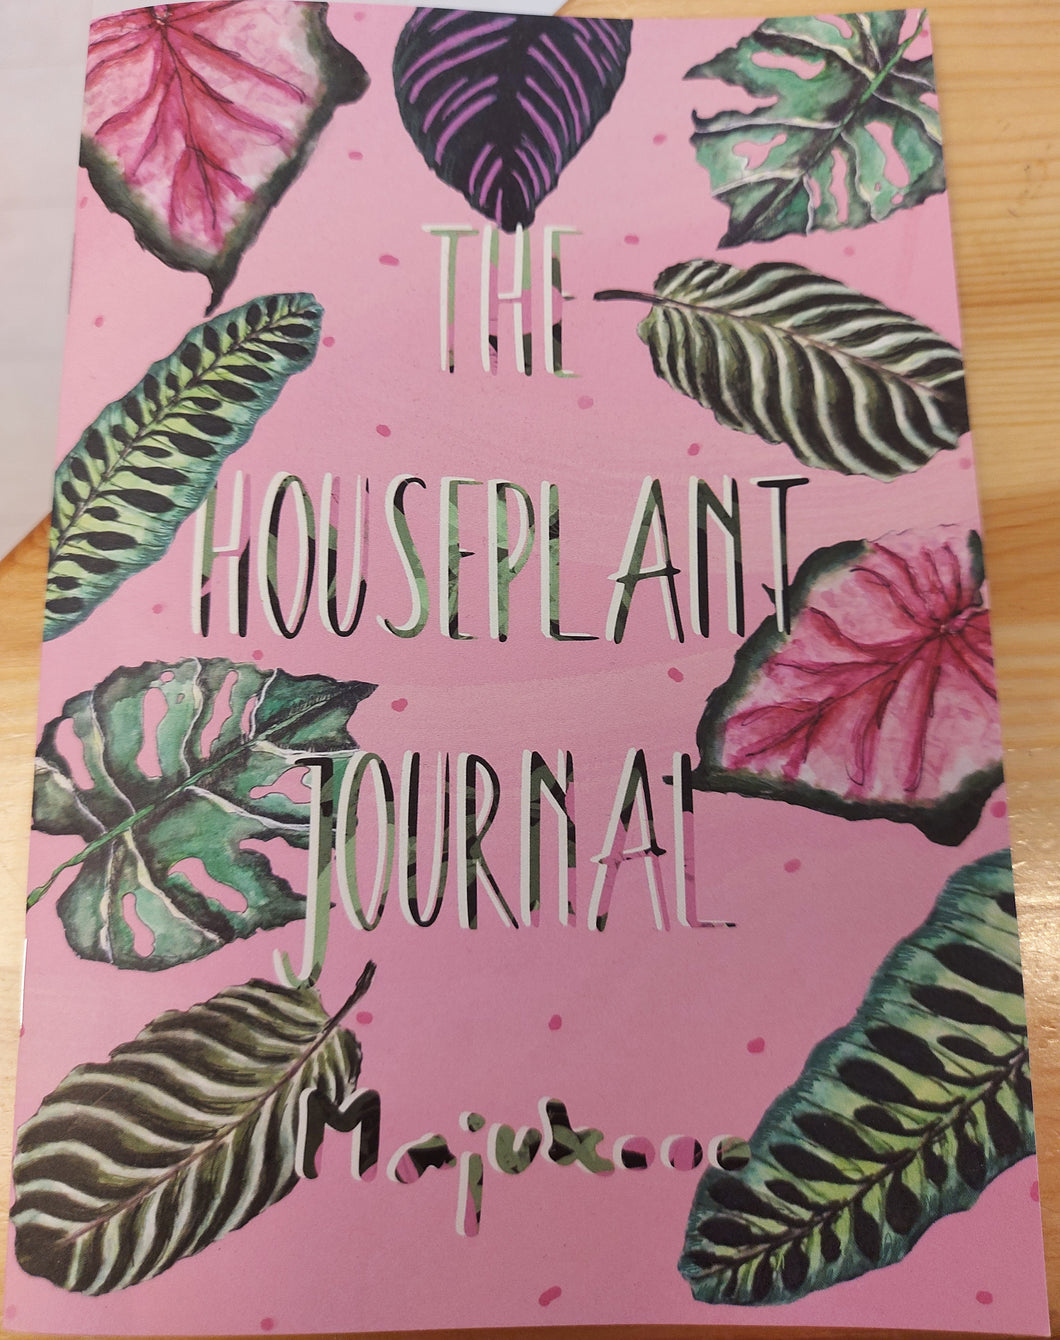 The Houseplant Journal